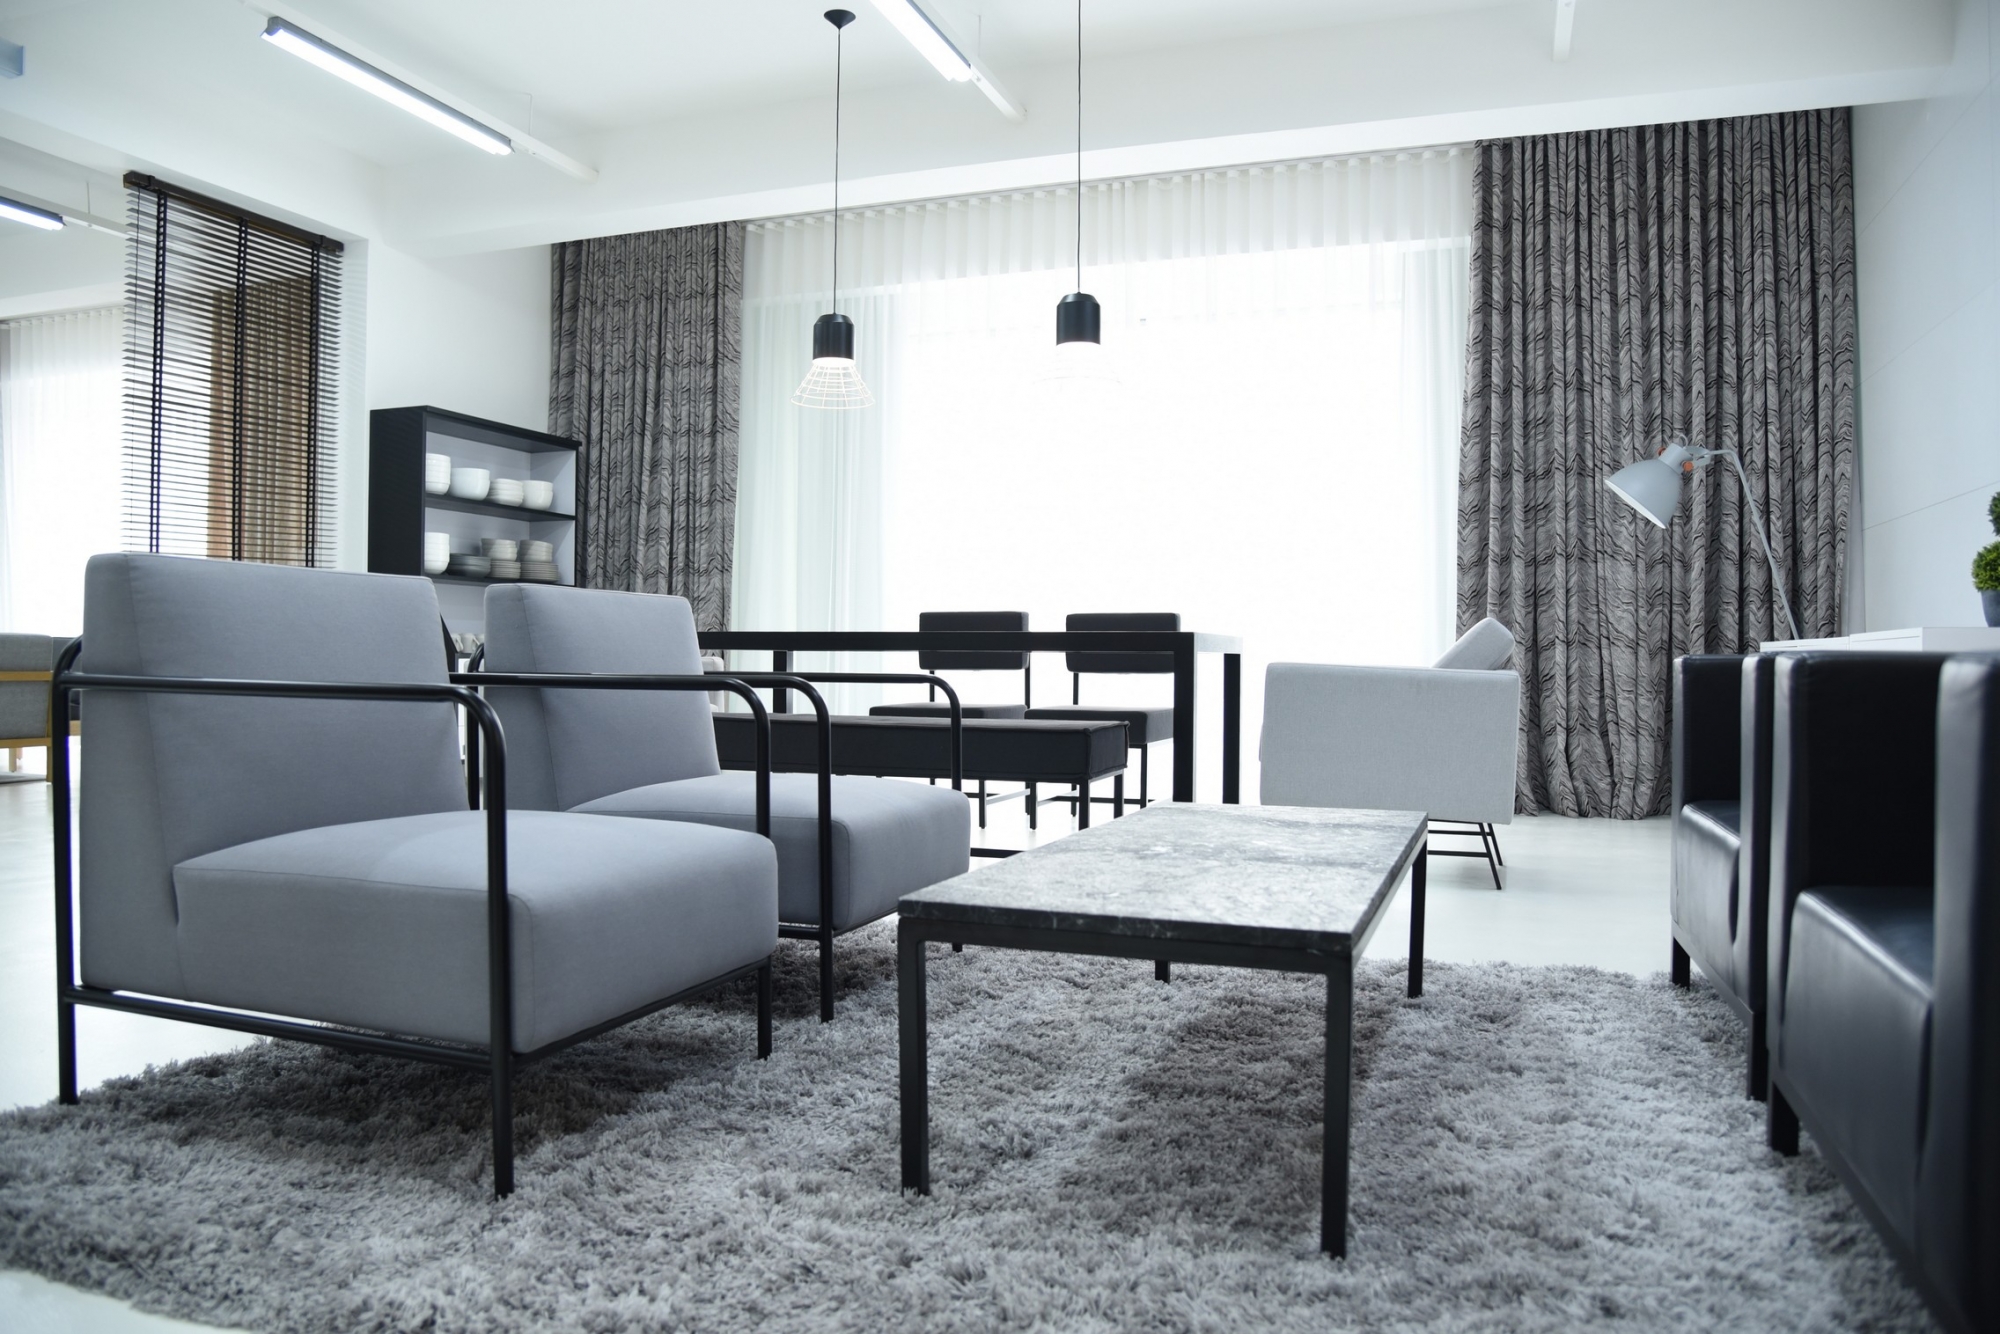 wallpaper malaysia design,furniture,living room,room,interior design,property